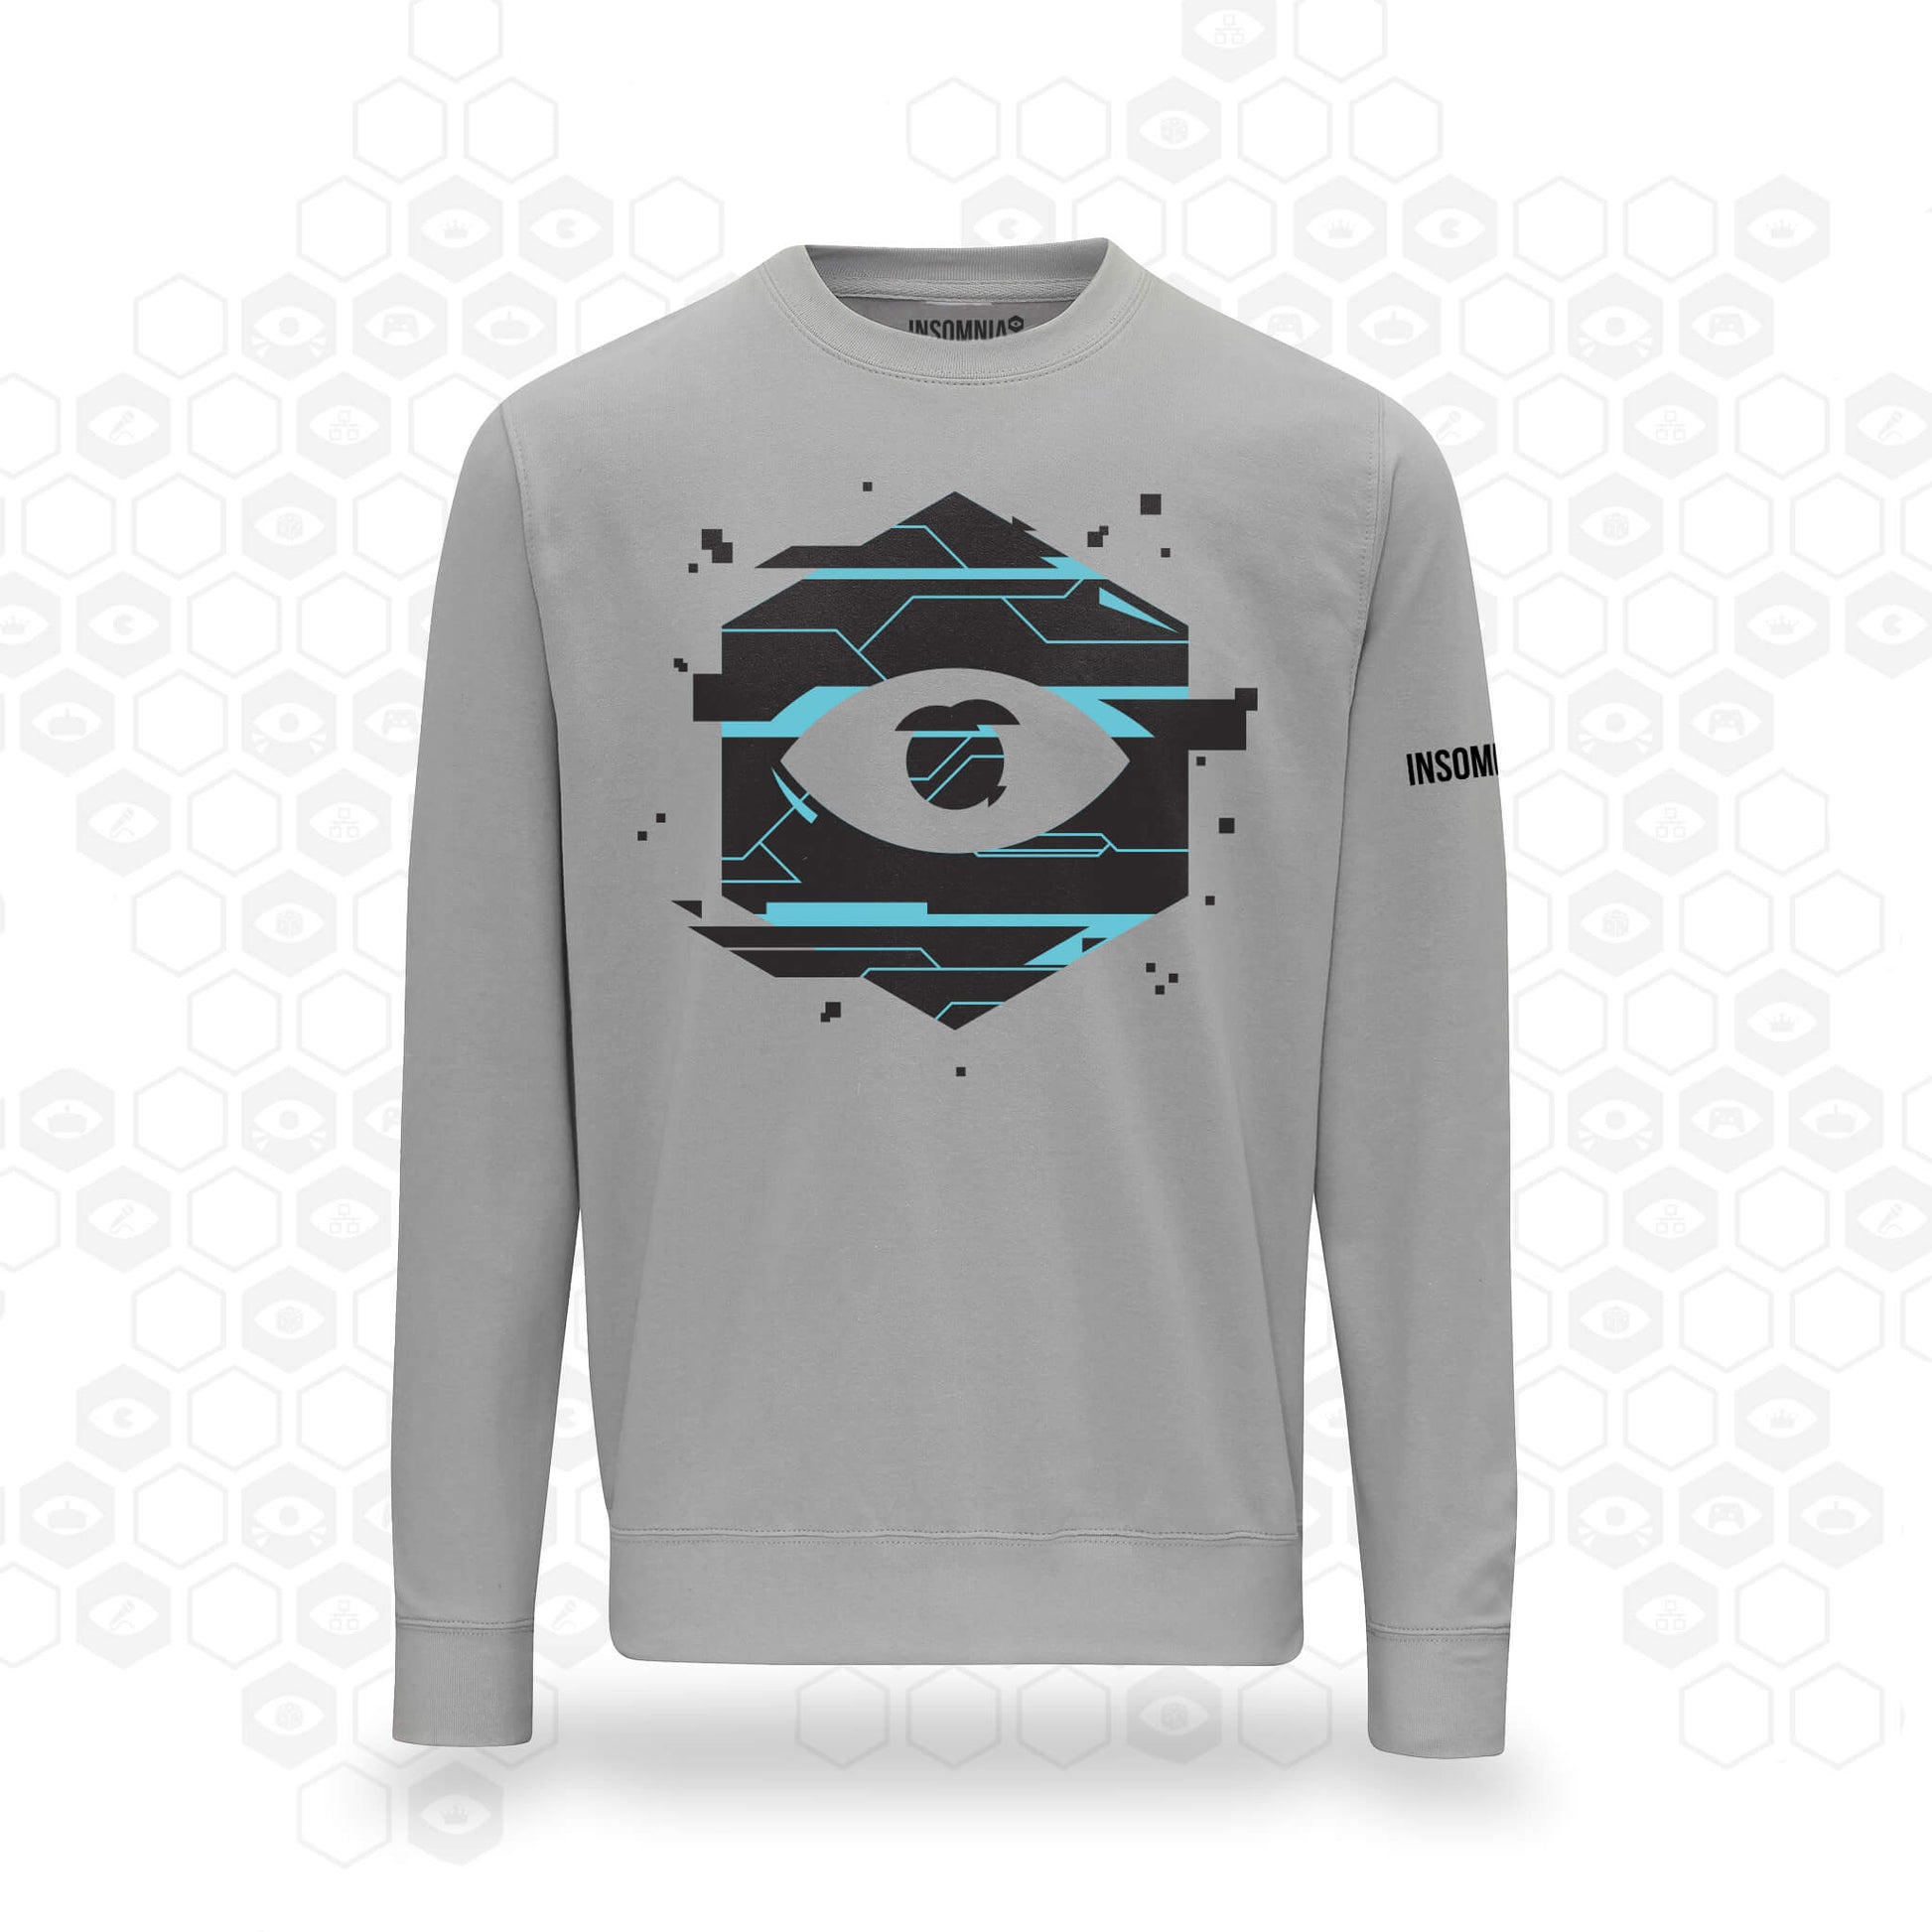 Grey Insomnia sweatshirt freaturing glitching eye design and insomina logo on the sleeve